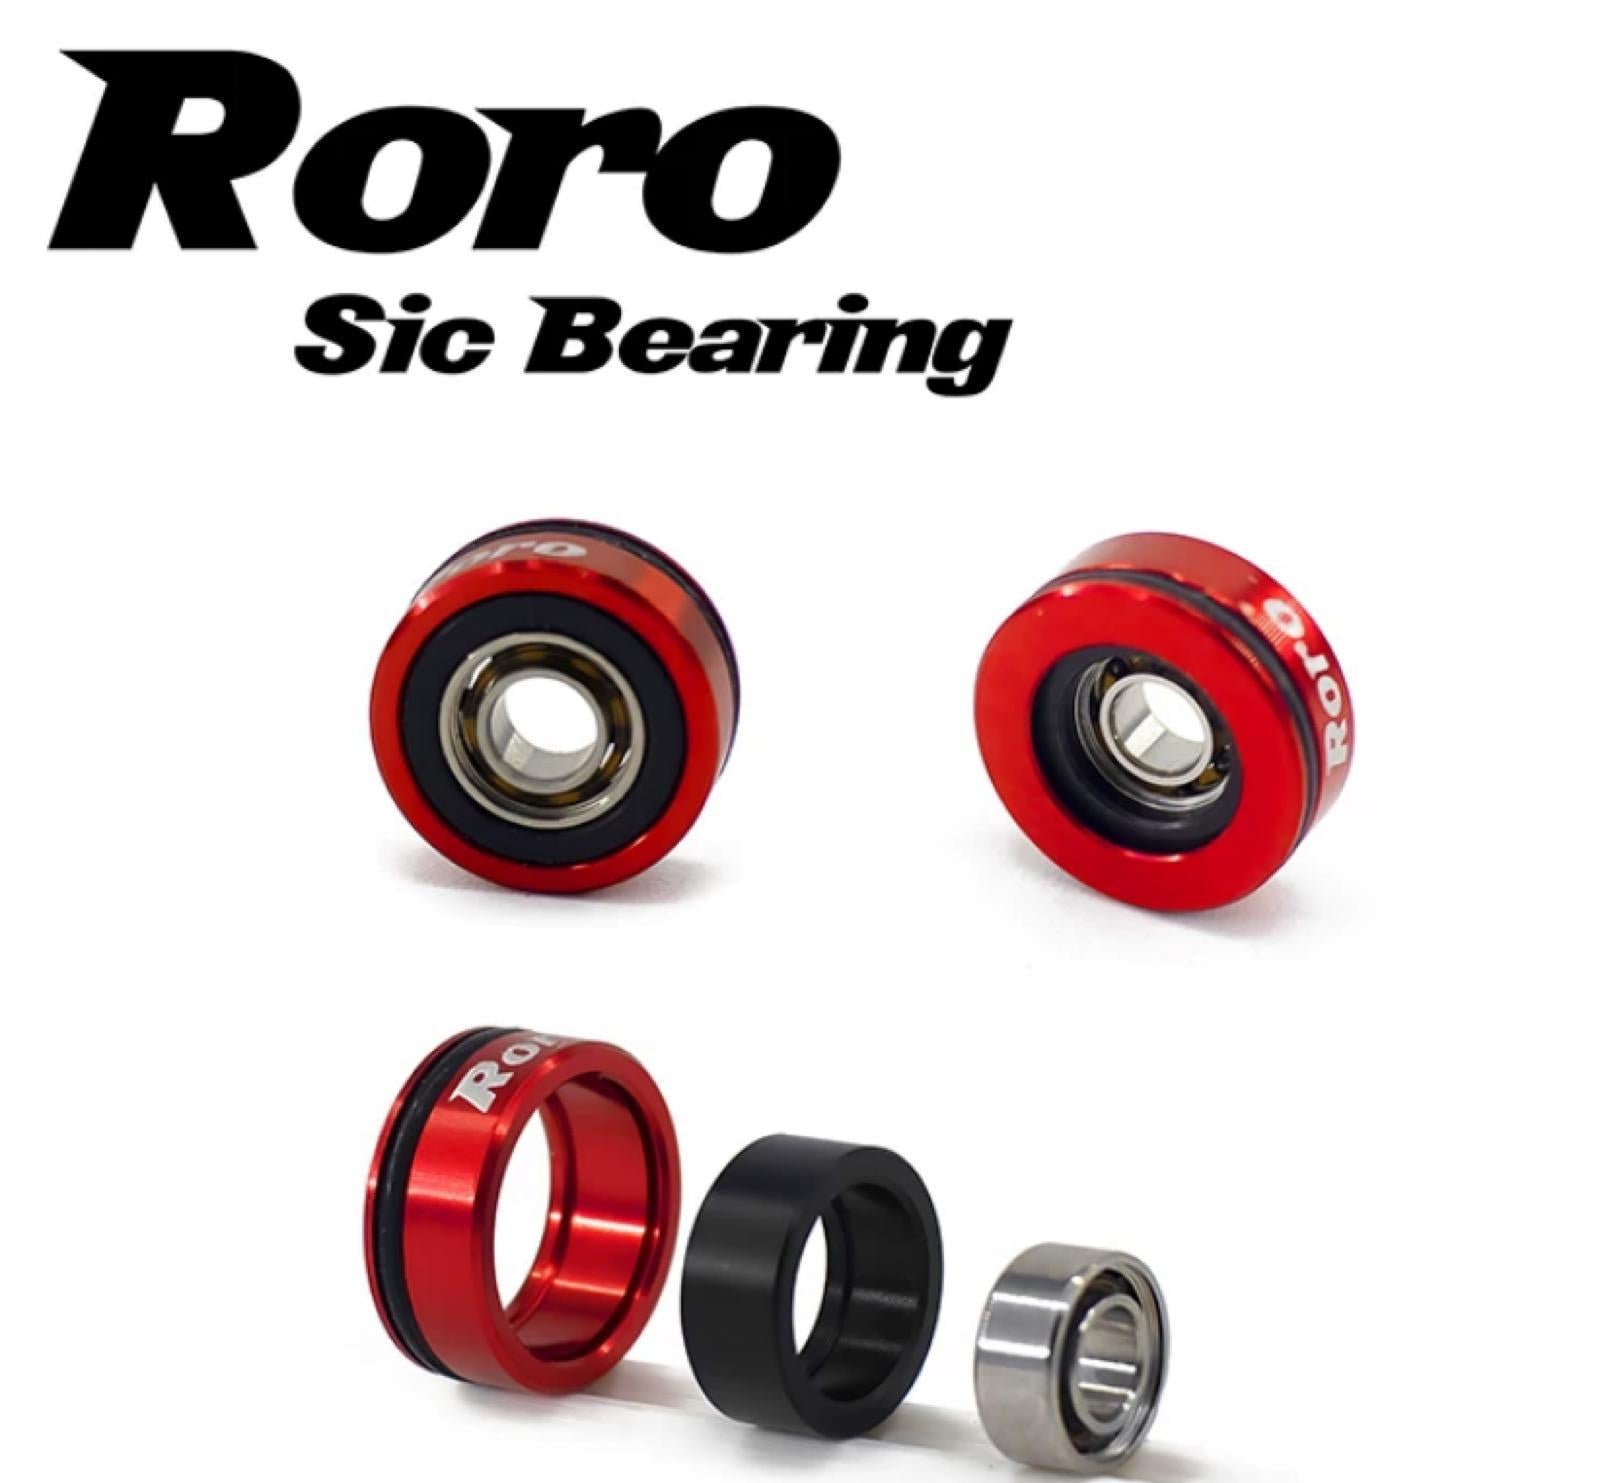 What is a Roro ceramic spool bearings for baitcasting reel? – RORO LURE